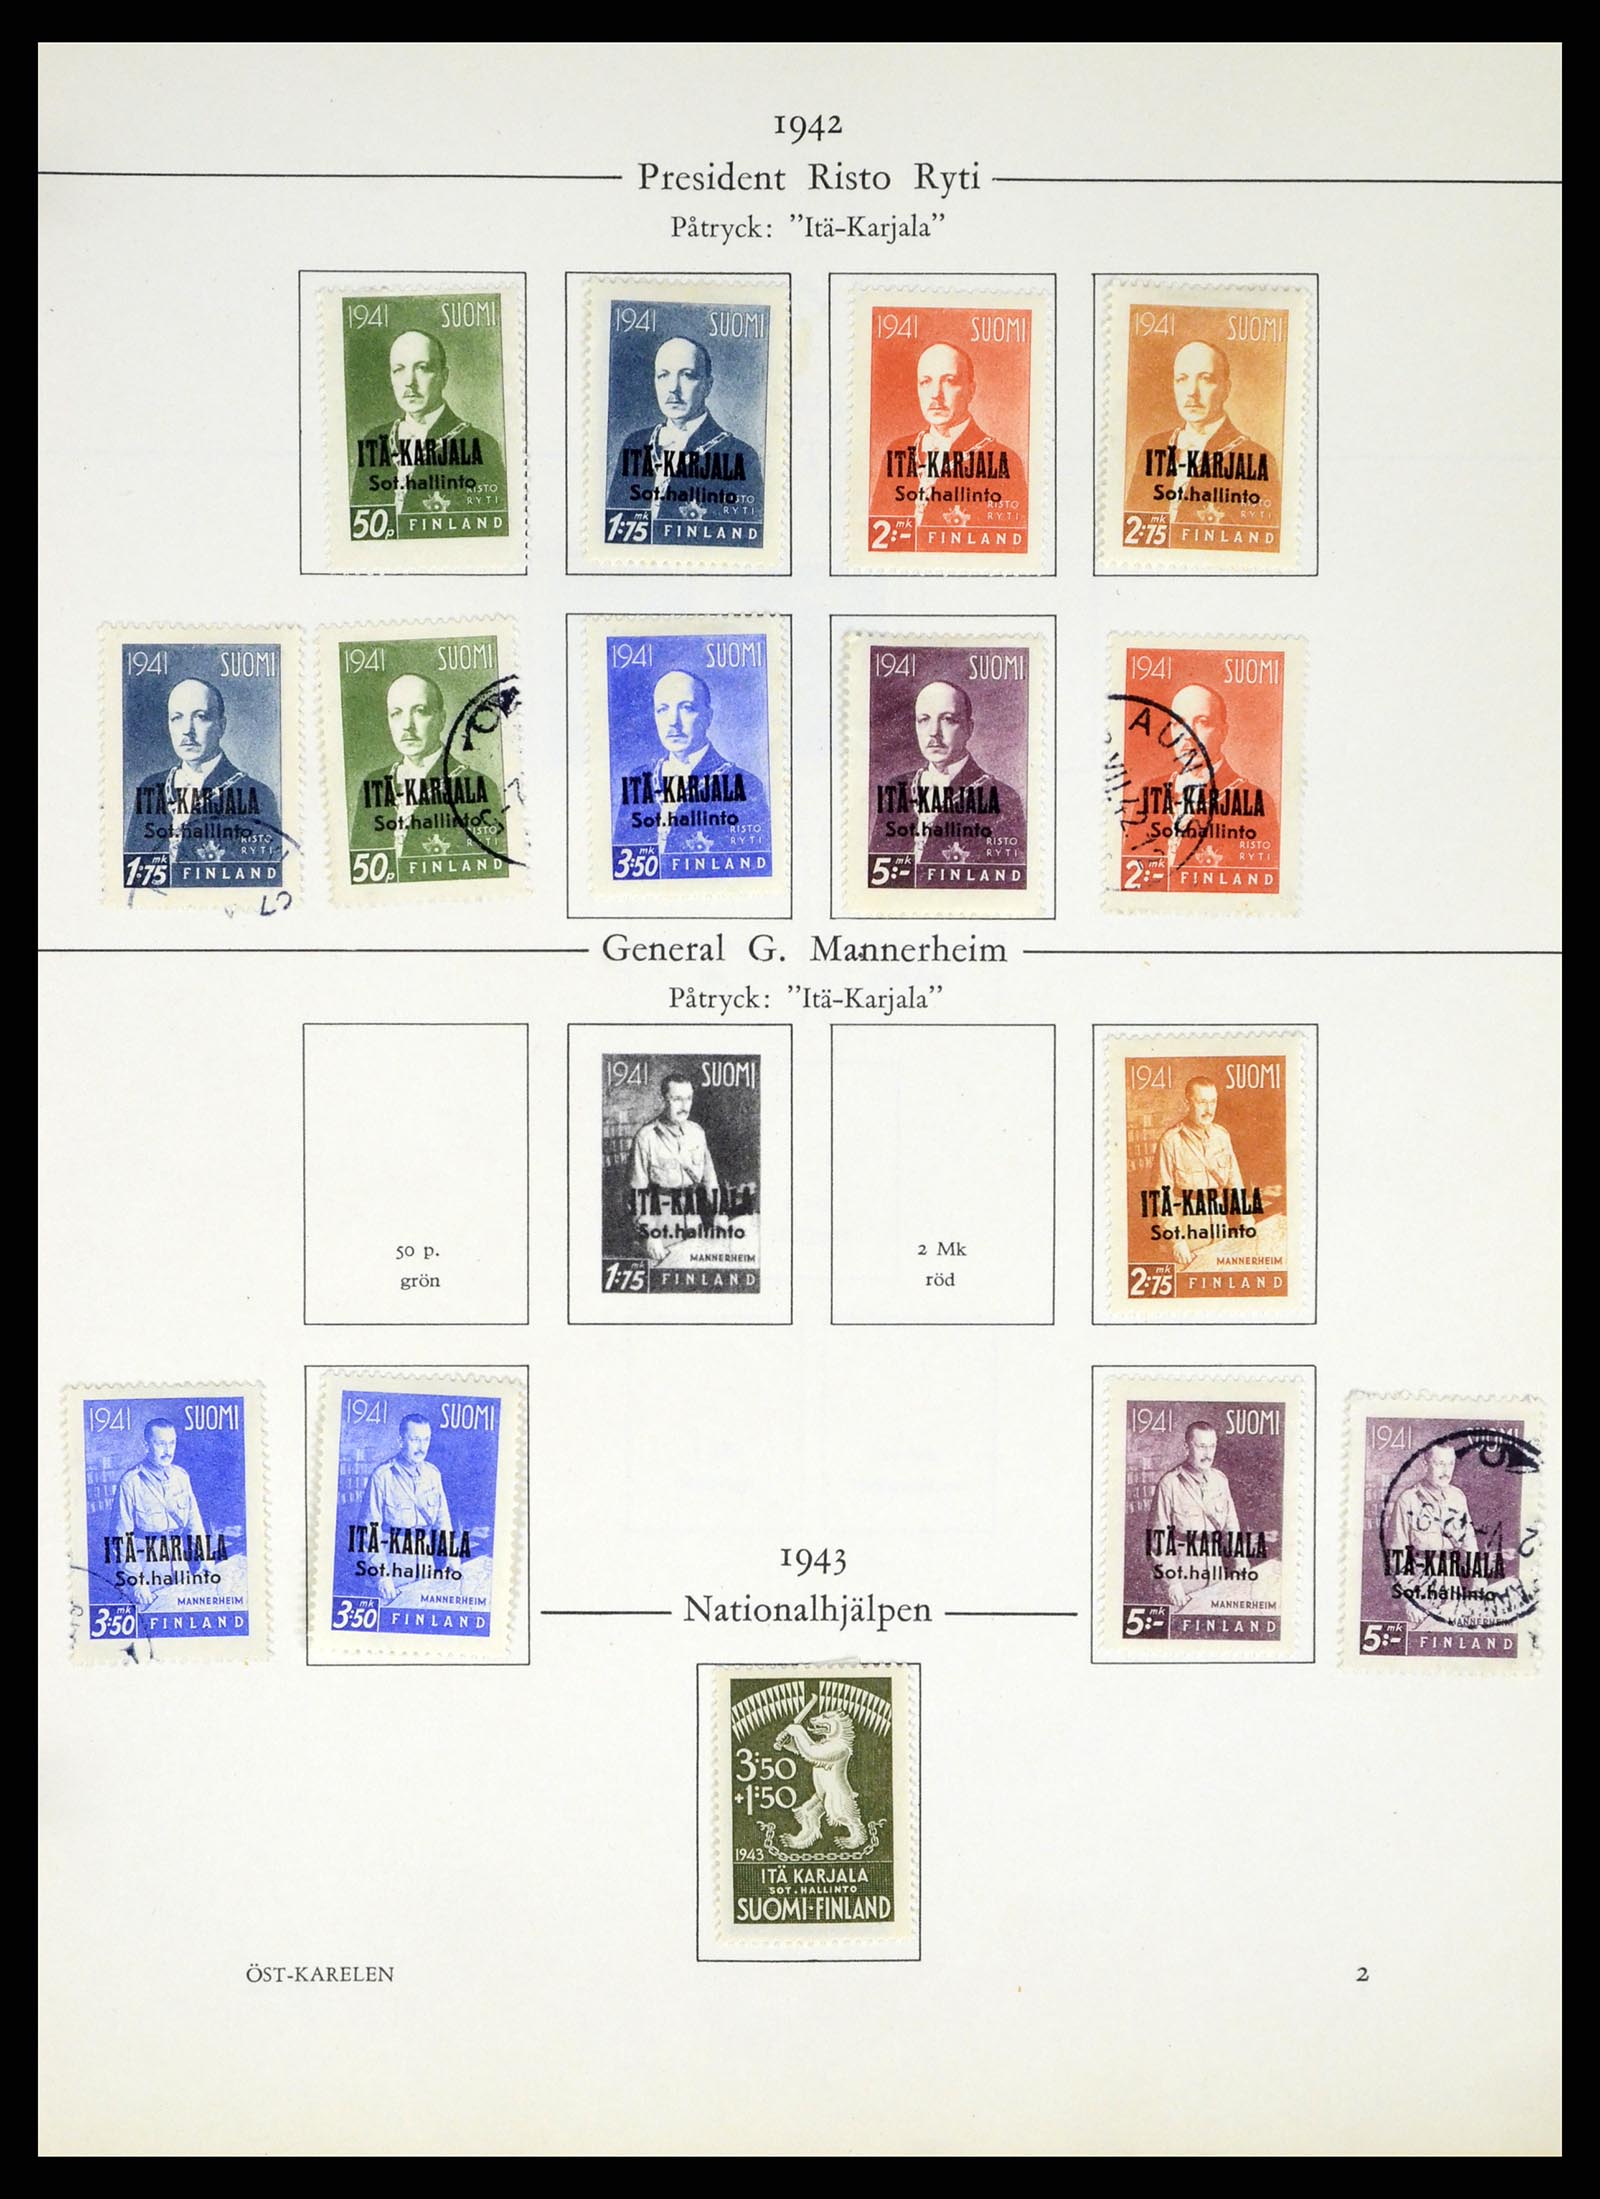 37387 230 - Stamp collection 37387 Scandinavia 1851-1960.